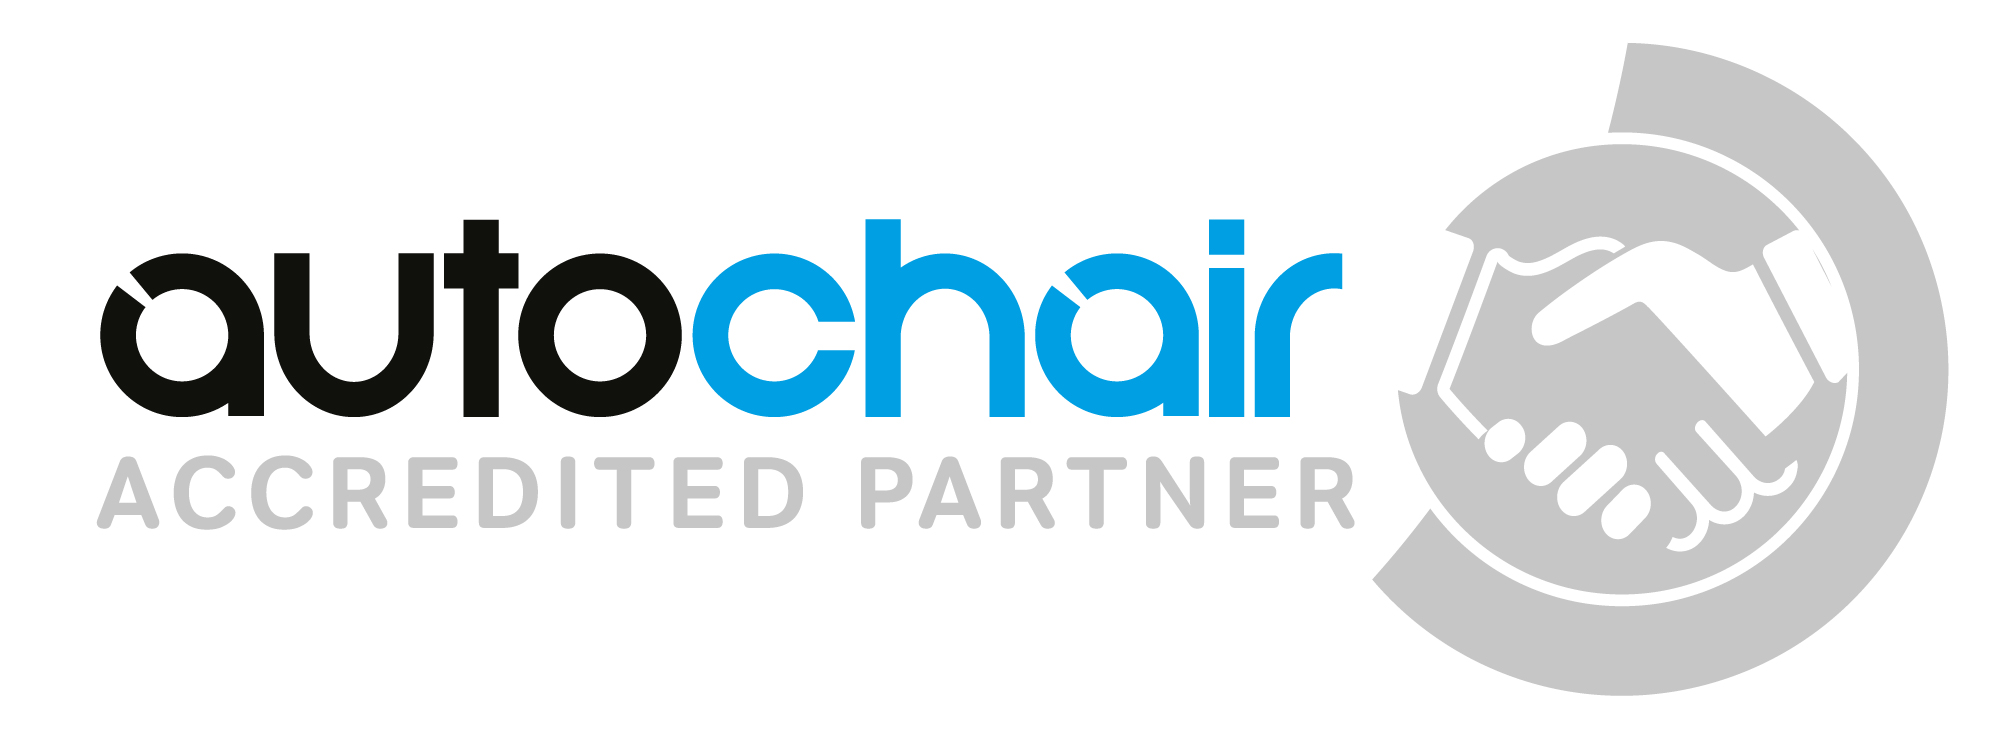 autochair-accredited-partner-logo-v4.jpg